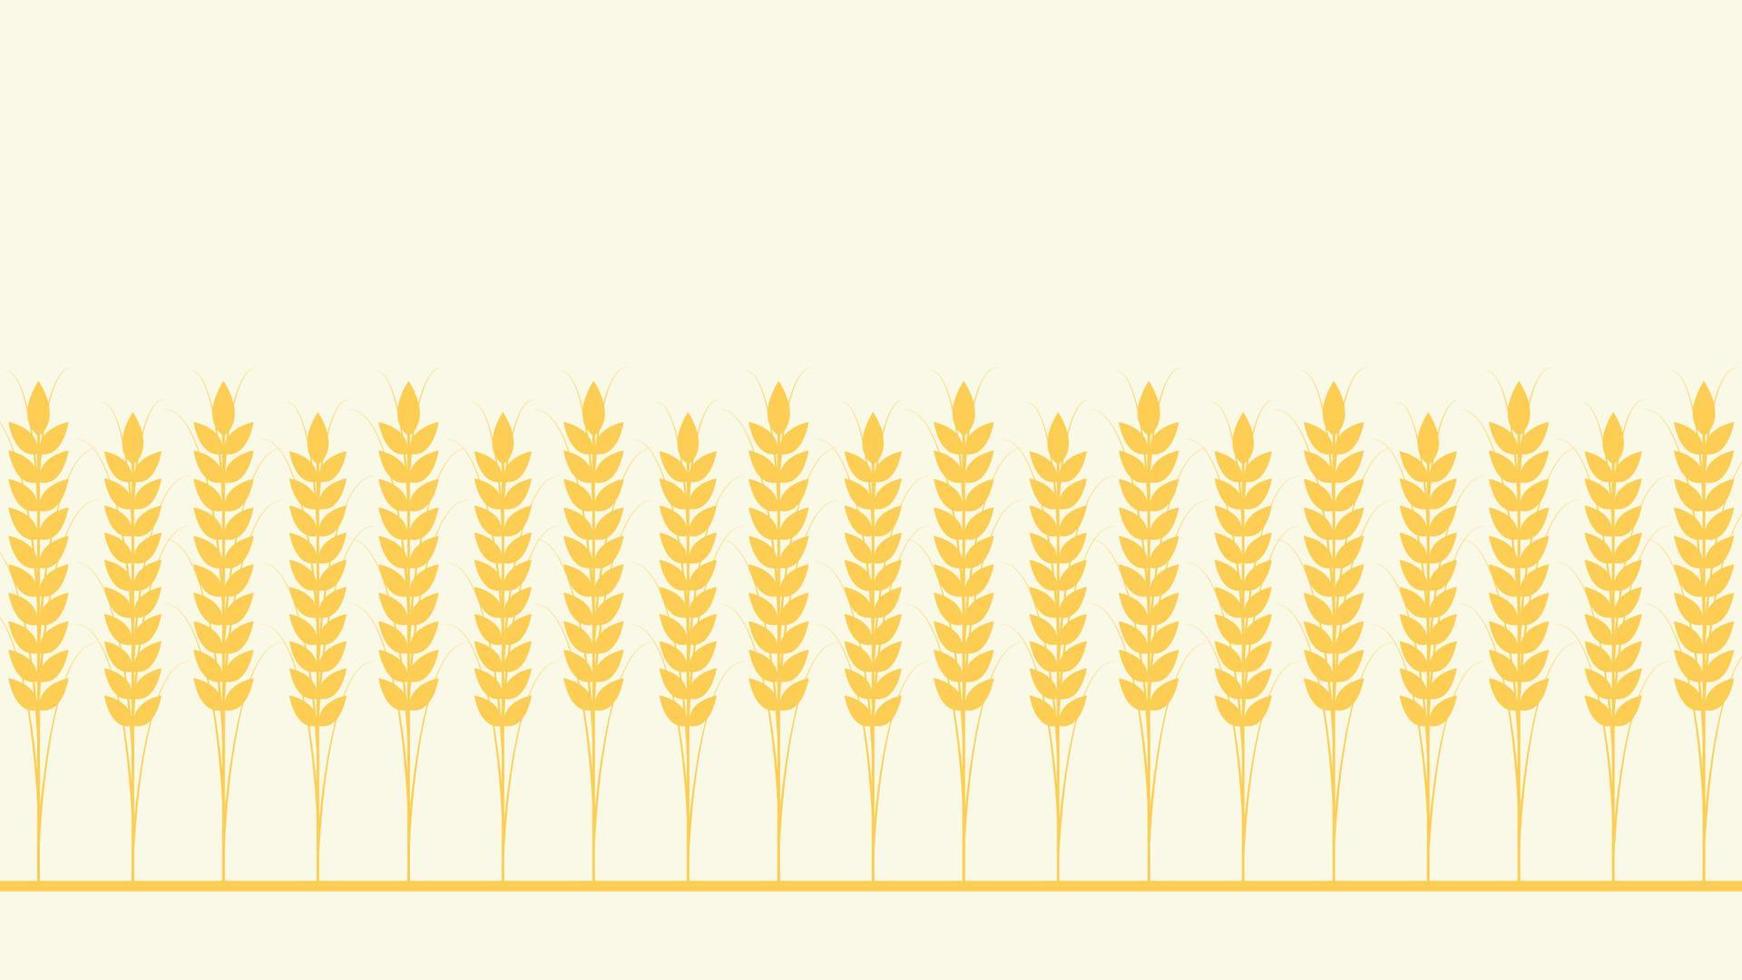 Wheat pattern wallpaper. Oat symbol. Rice sign. Rice pattern wallpaper. vector